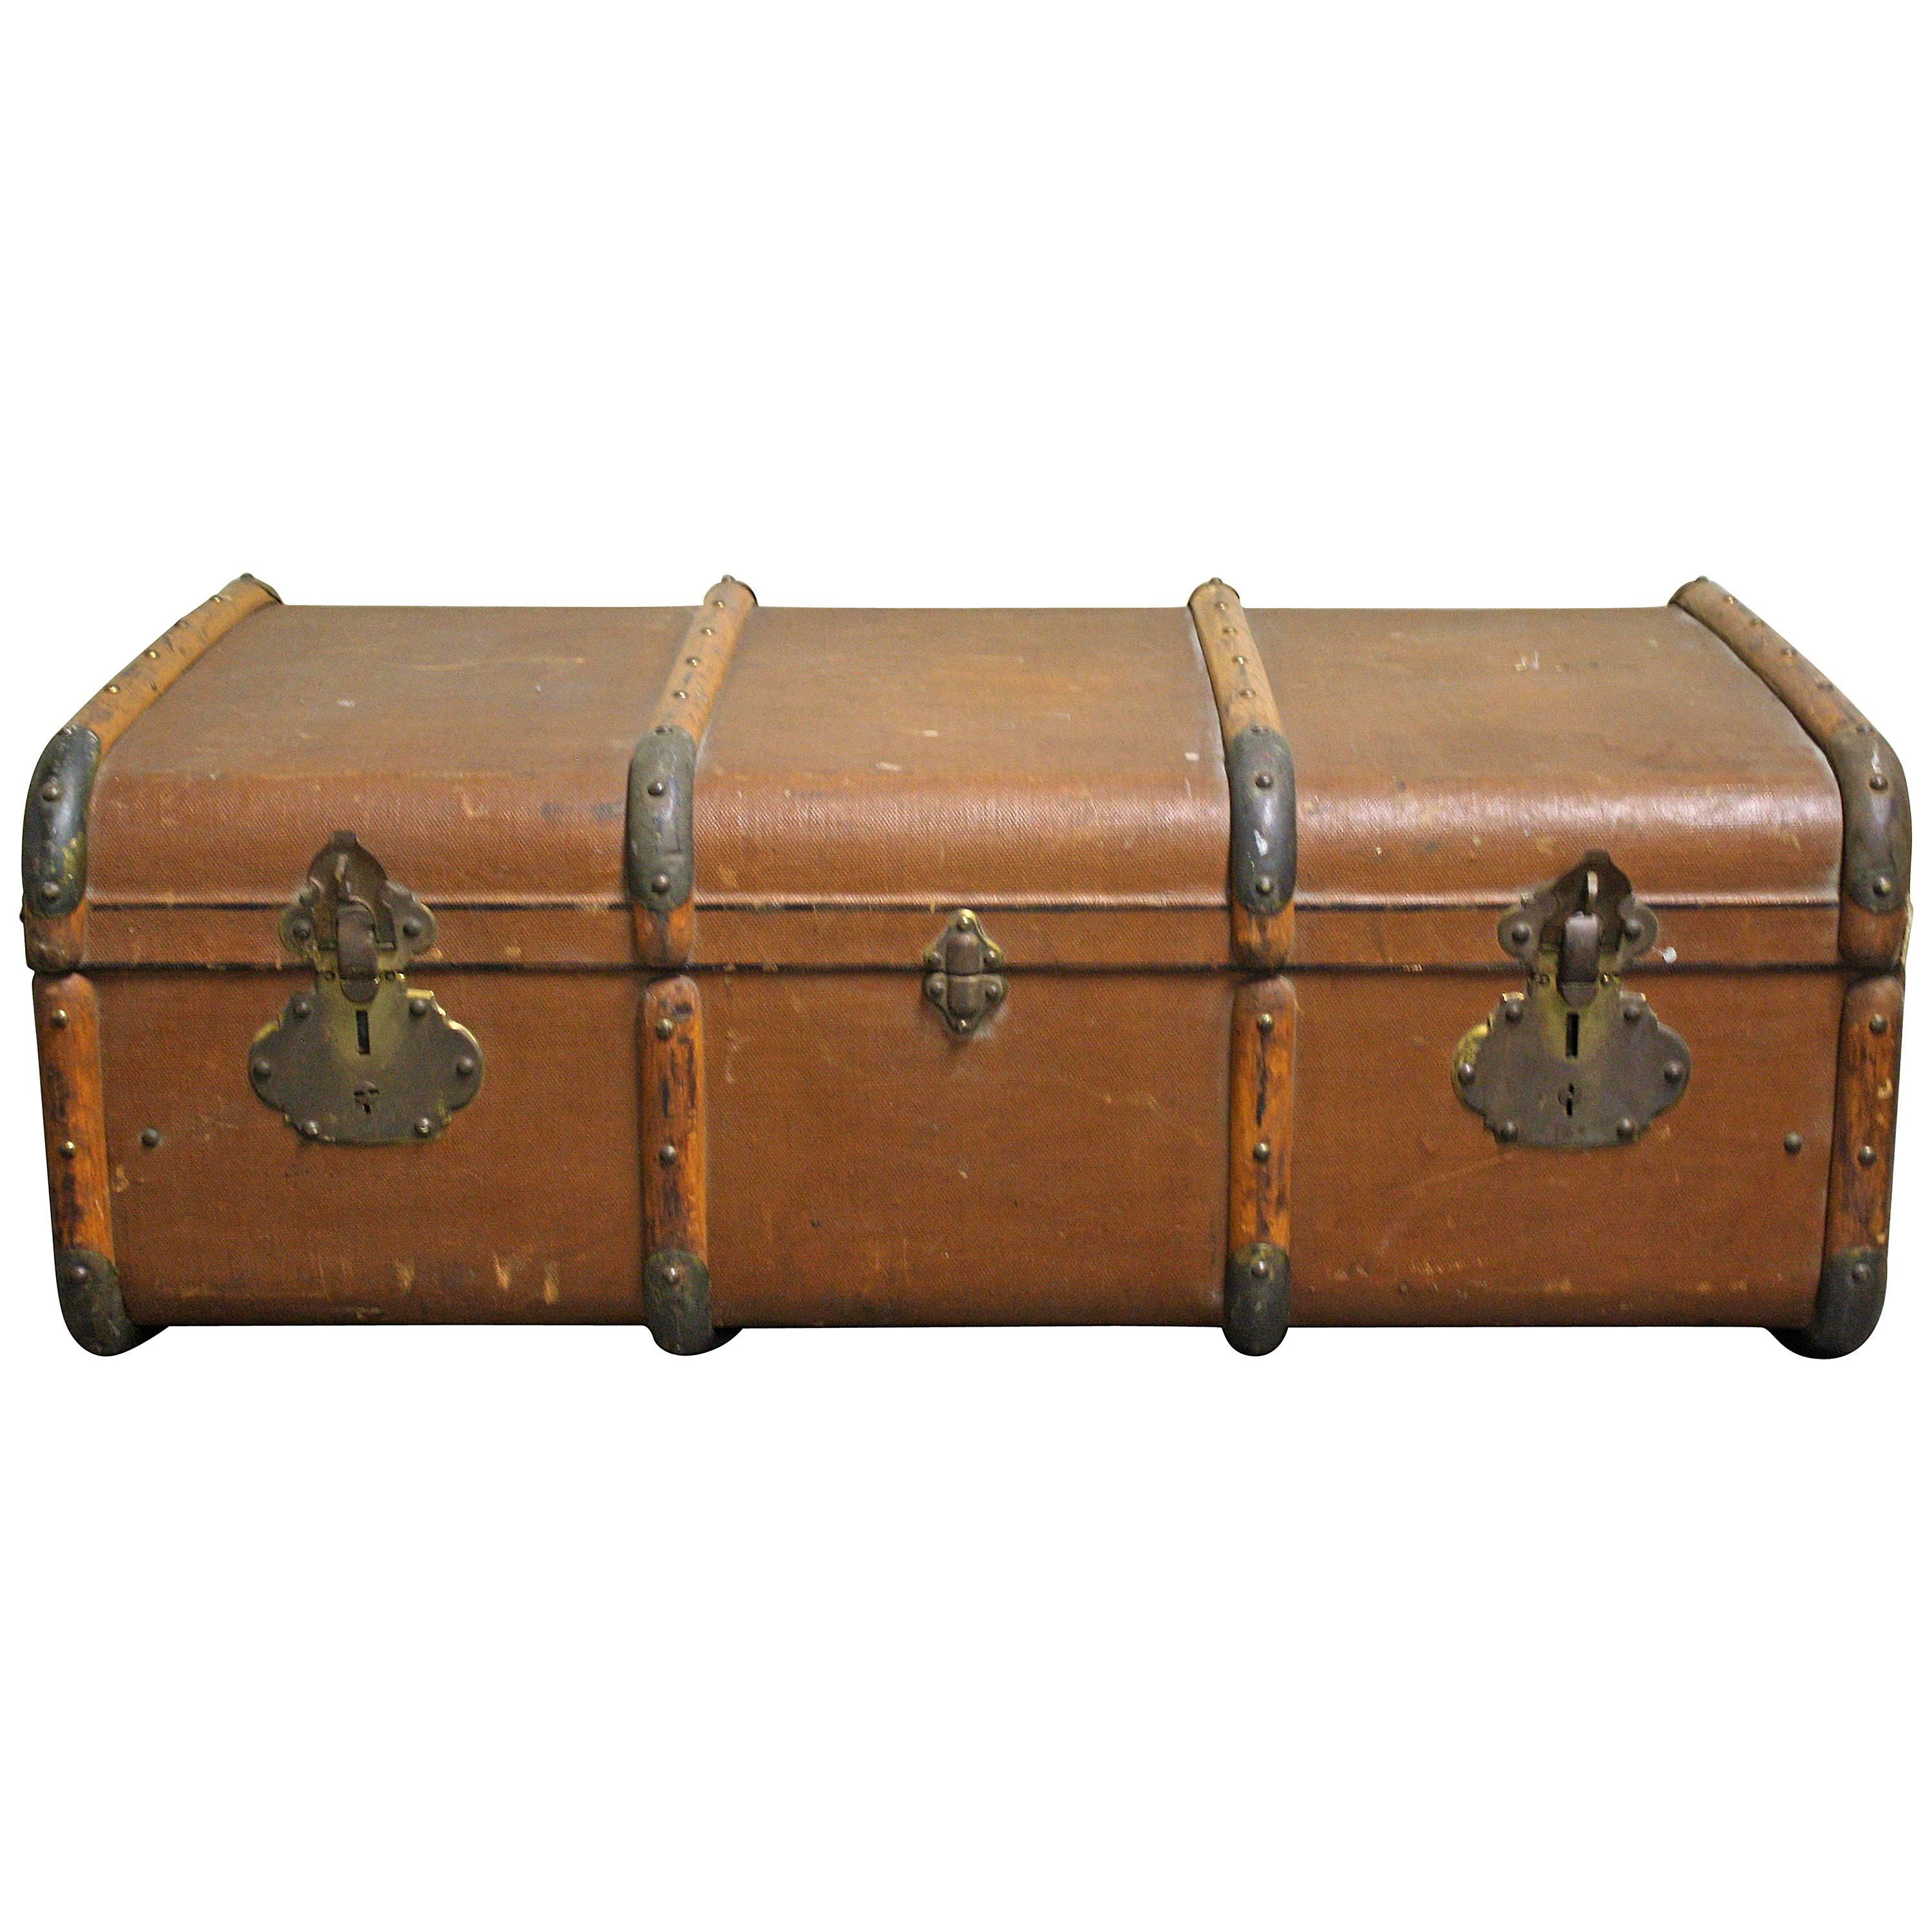 Antique Suitcase or Travel Trunk, 1930s